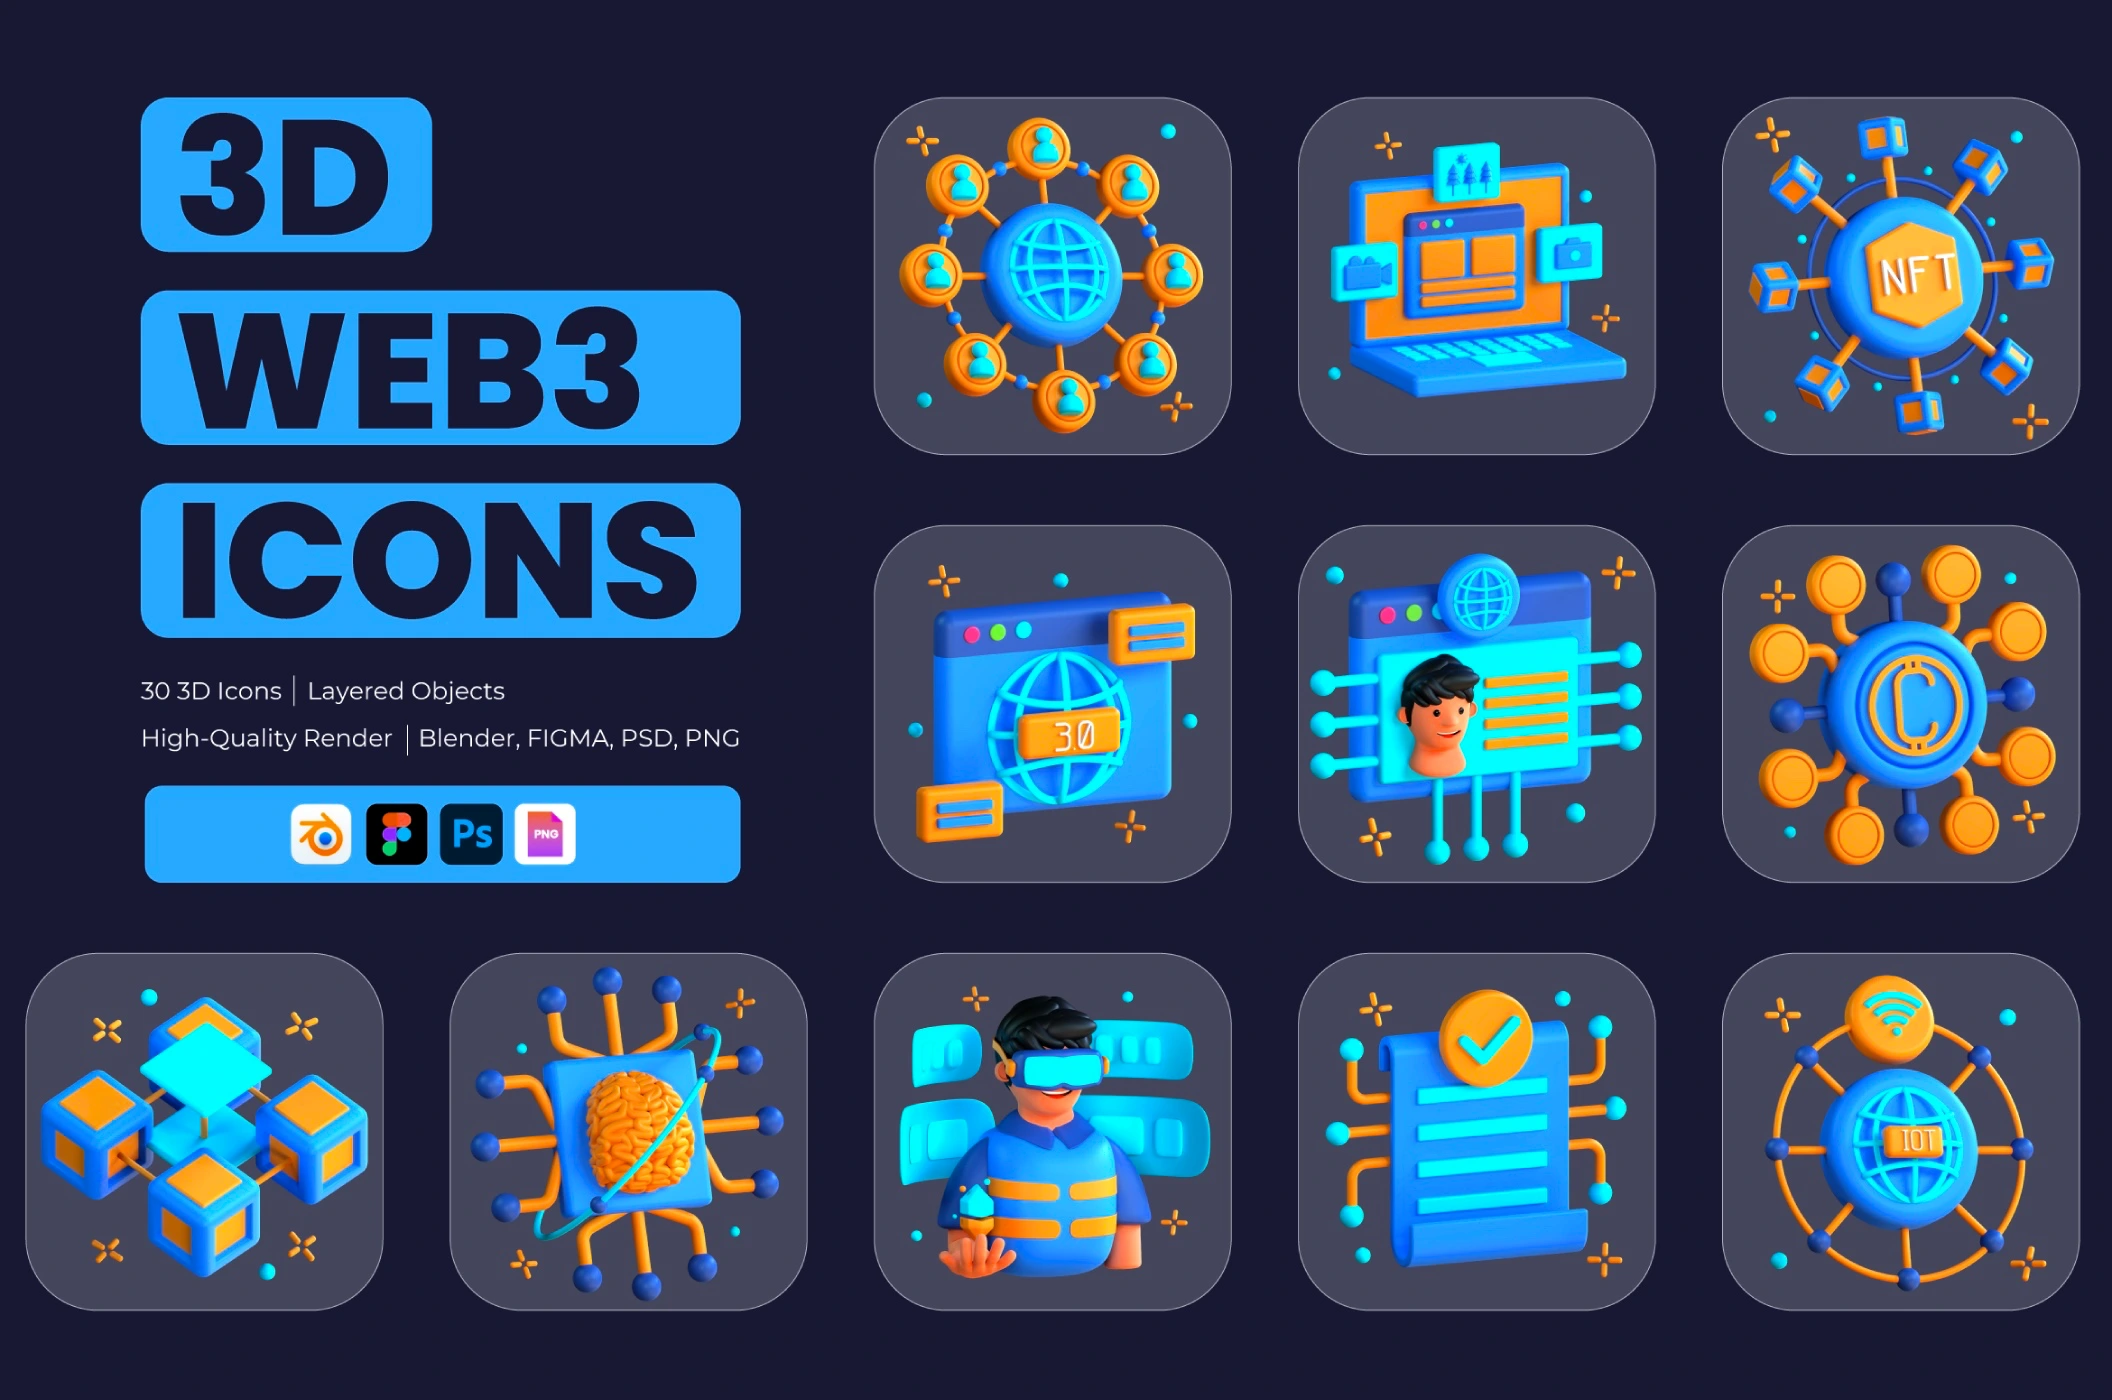 [VIP] 3D Web 3.0 Icons Illustration